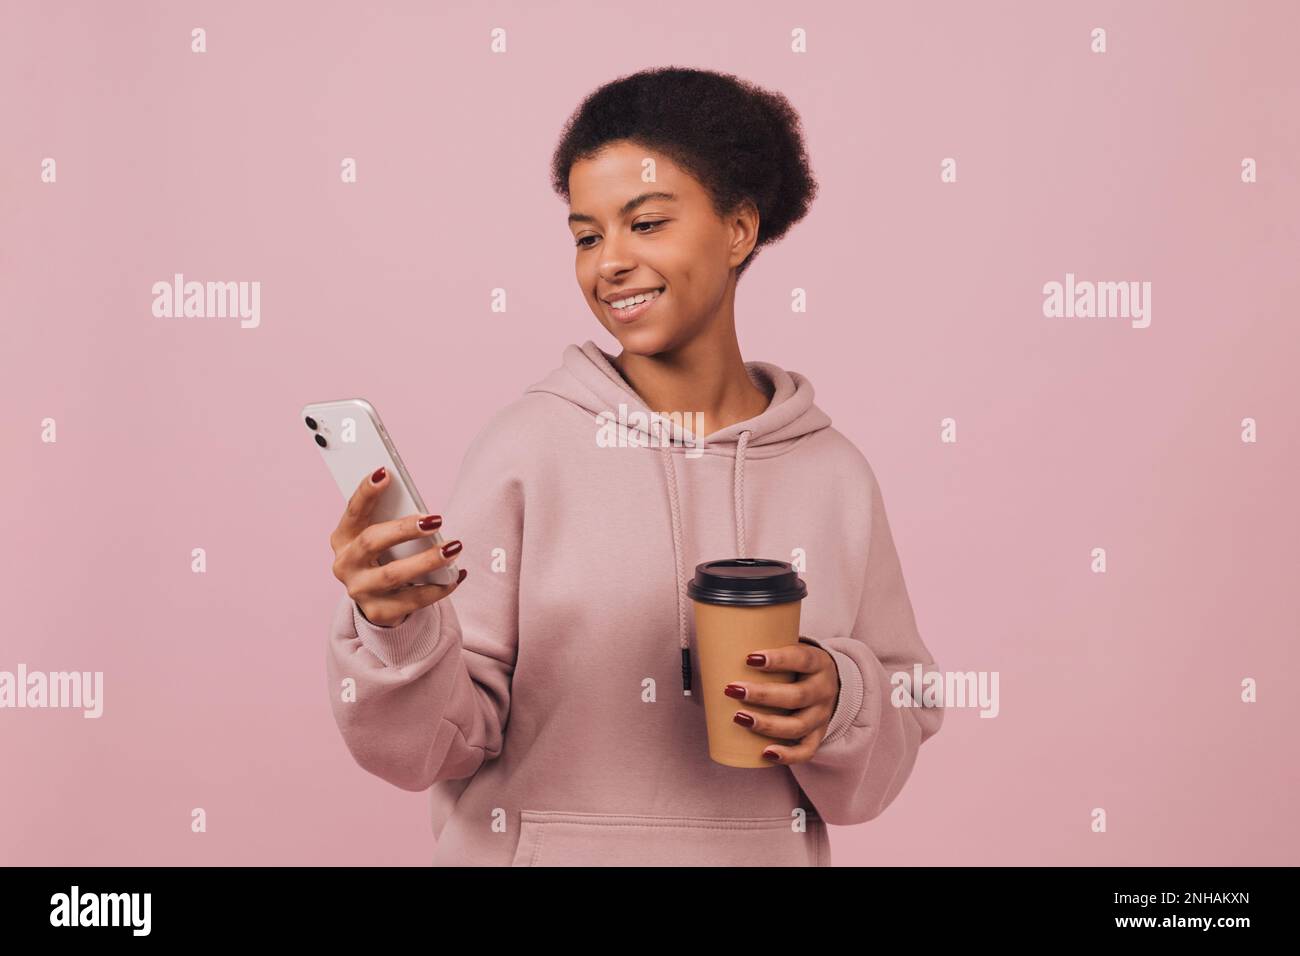 Smiling stylish girl posing over pink background. Studio portrait Stock Photo